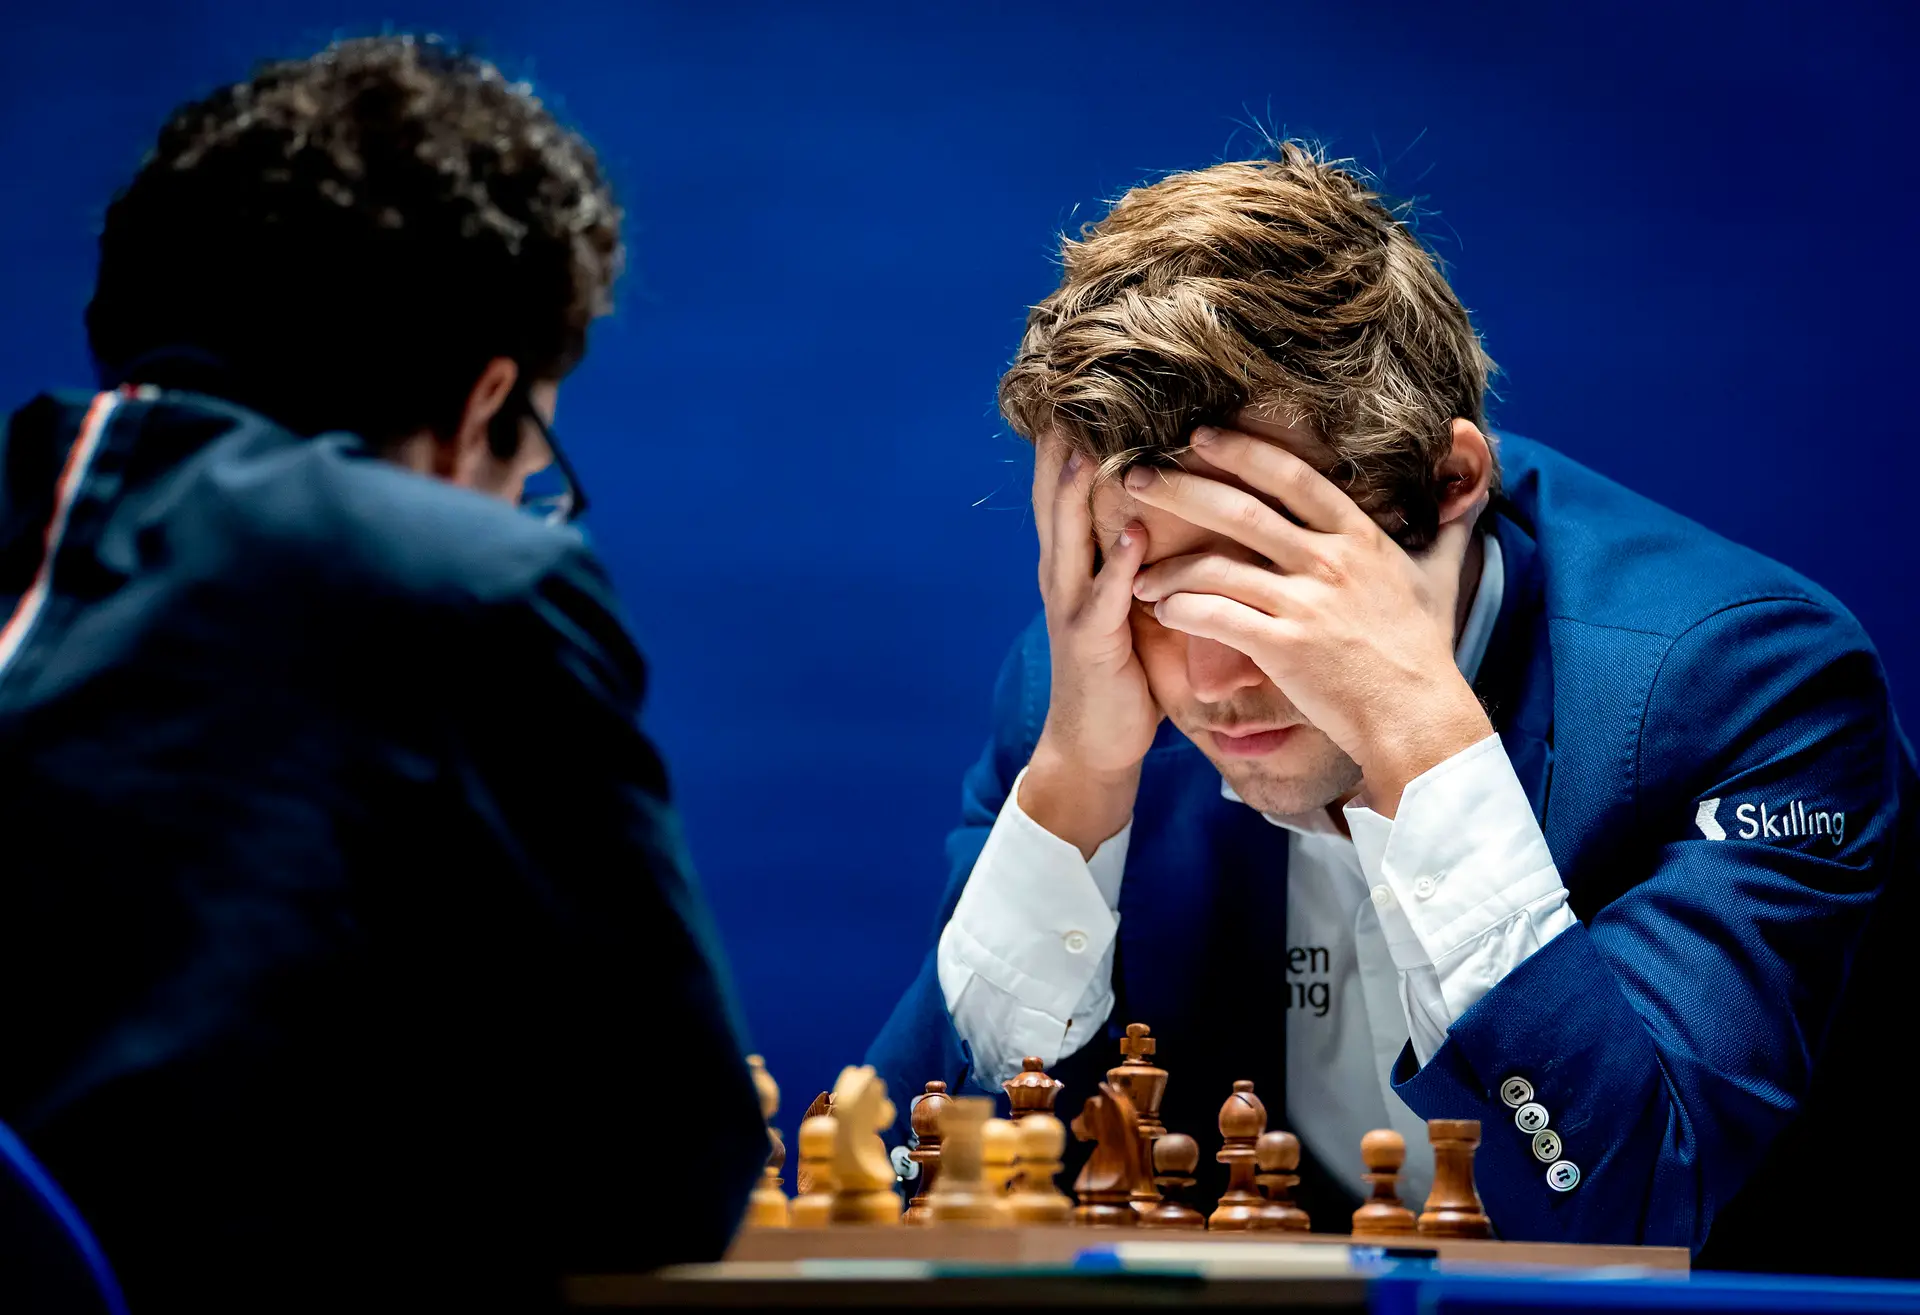 Magnus Carlsen vence Mundial de Xadrez – Associação de Xadrez de